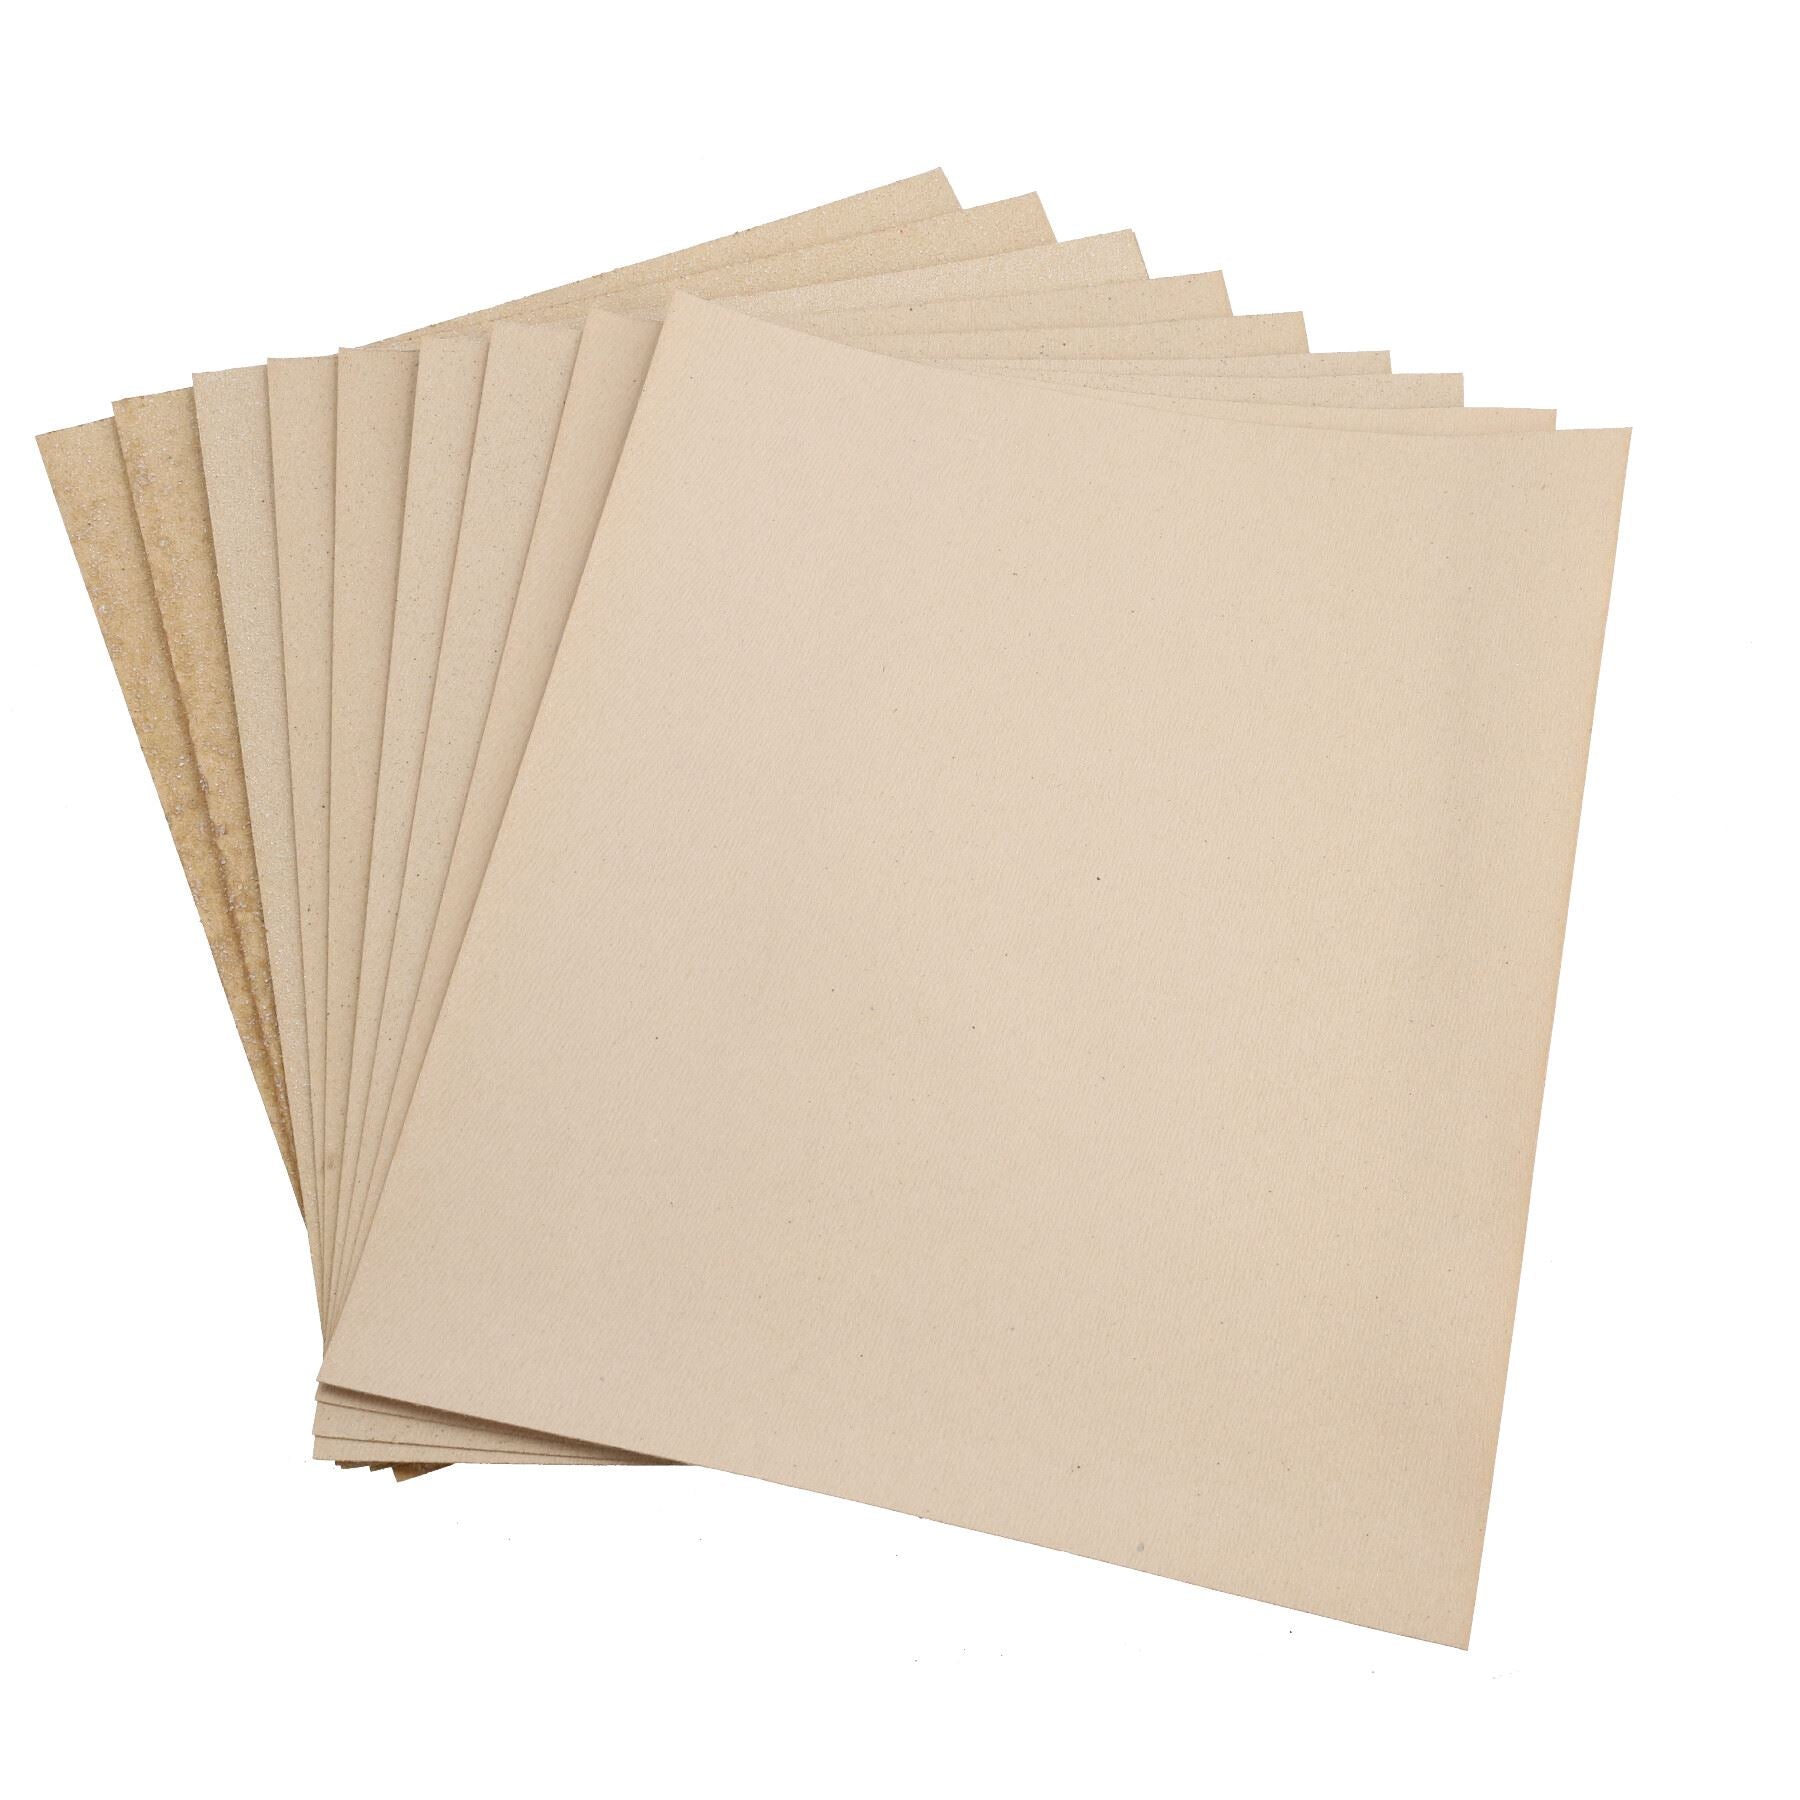 Assorted Grit Sandpaper Sheets 40 grit to 150 Mixed Grit Abrasive Sanding